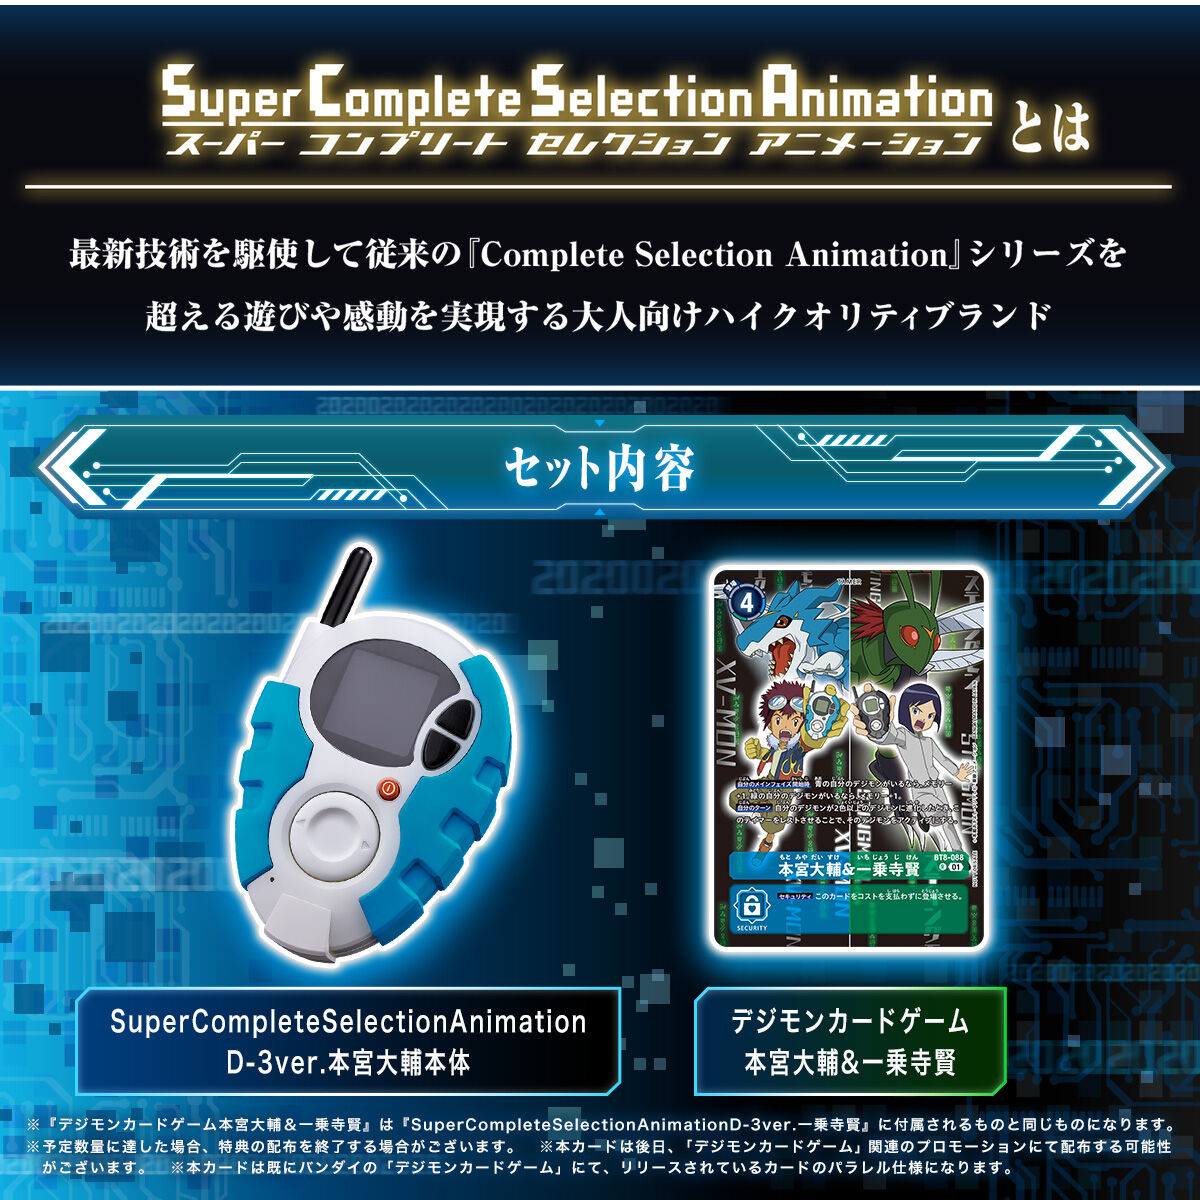 SuperCompleteSelectionAnimation D-3ver.本宮大輔